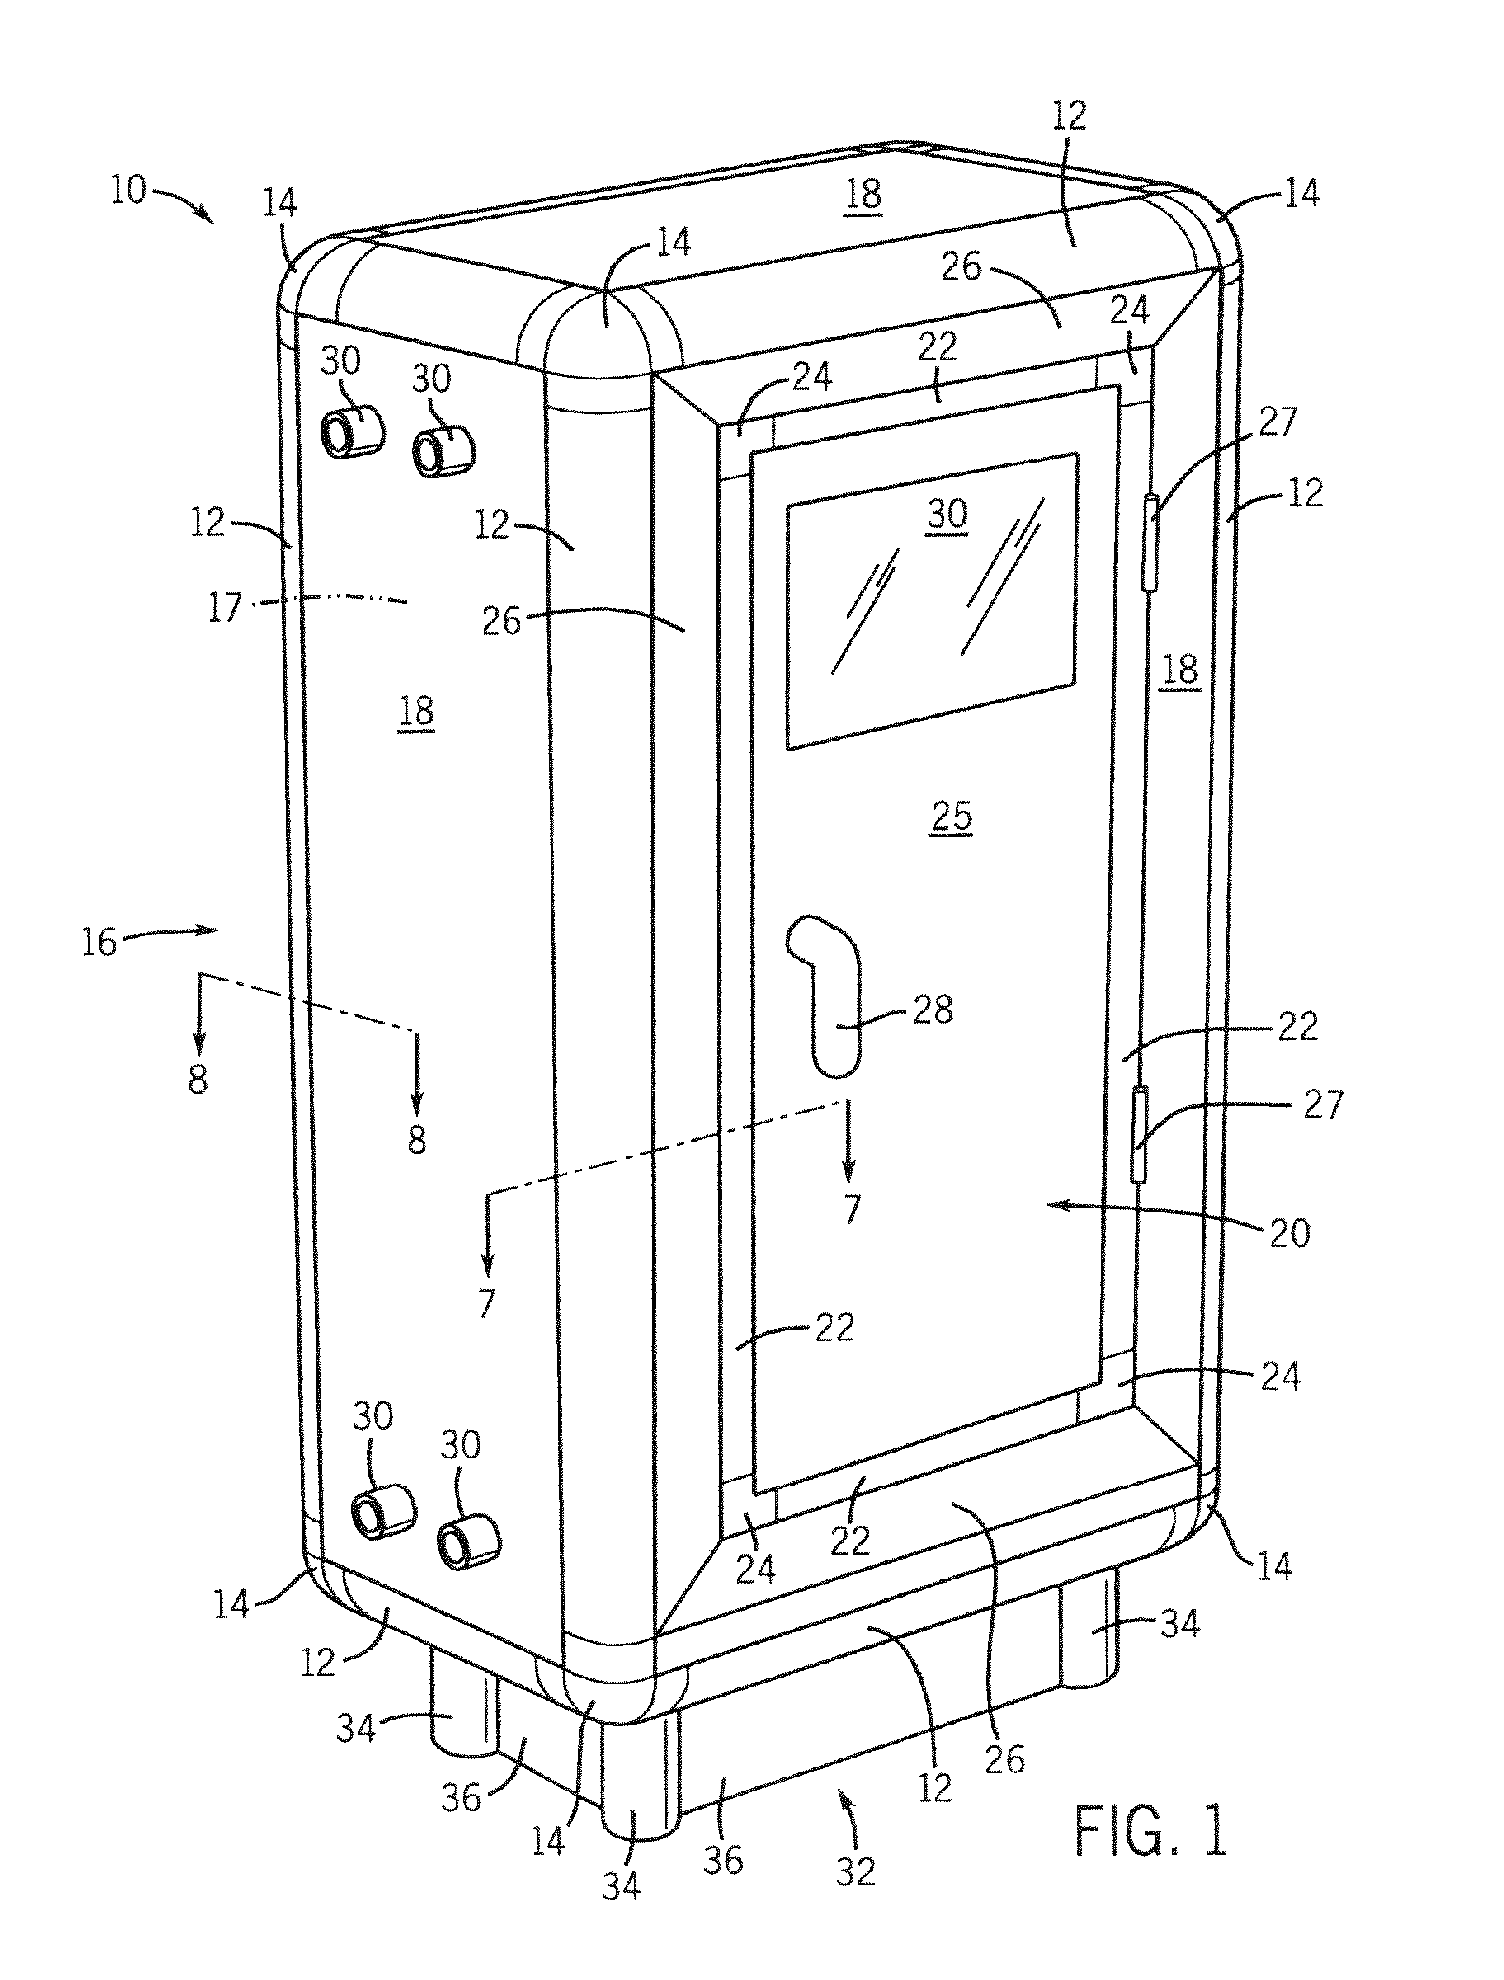 Modular enclosure system